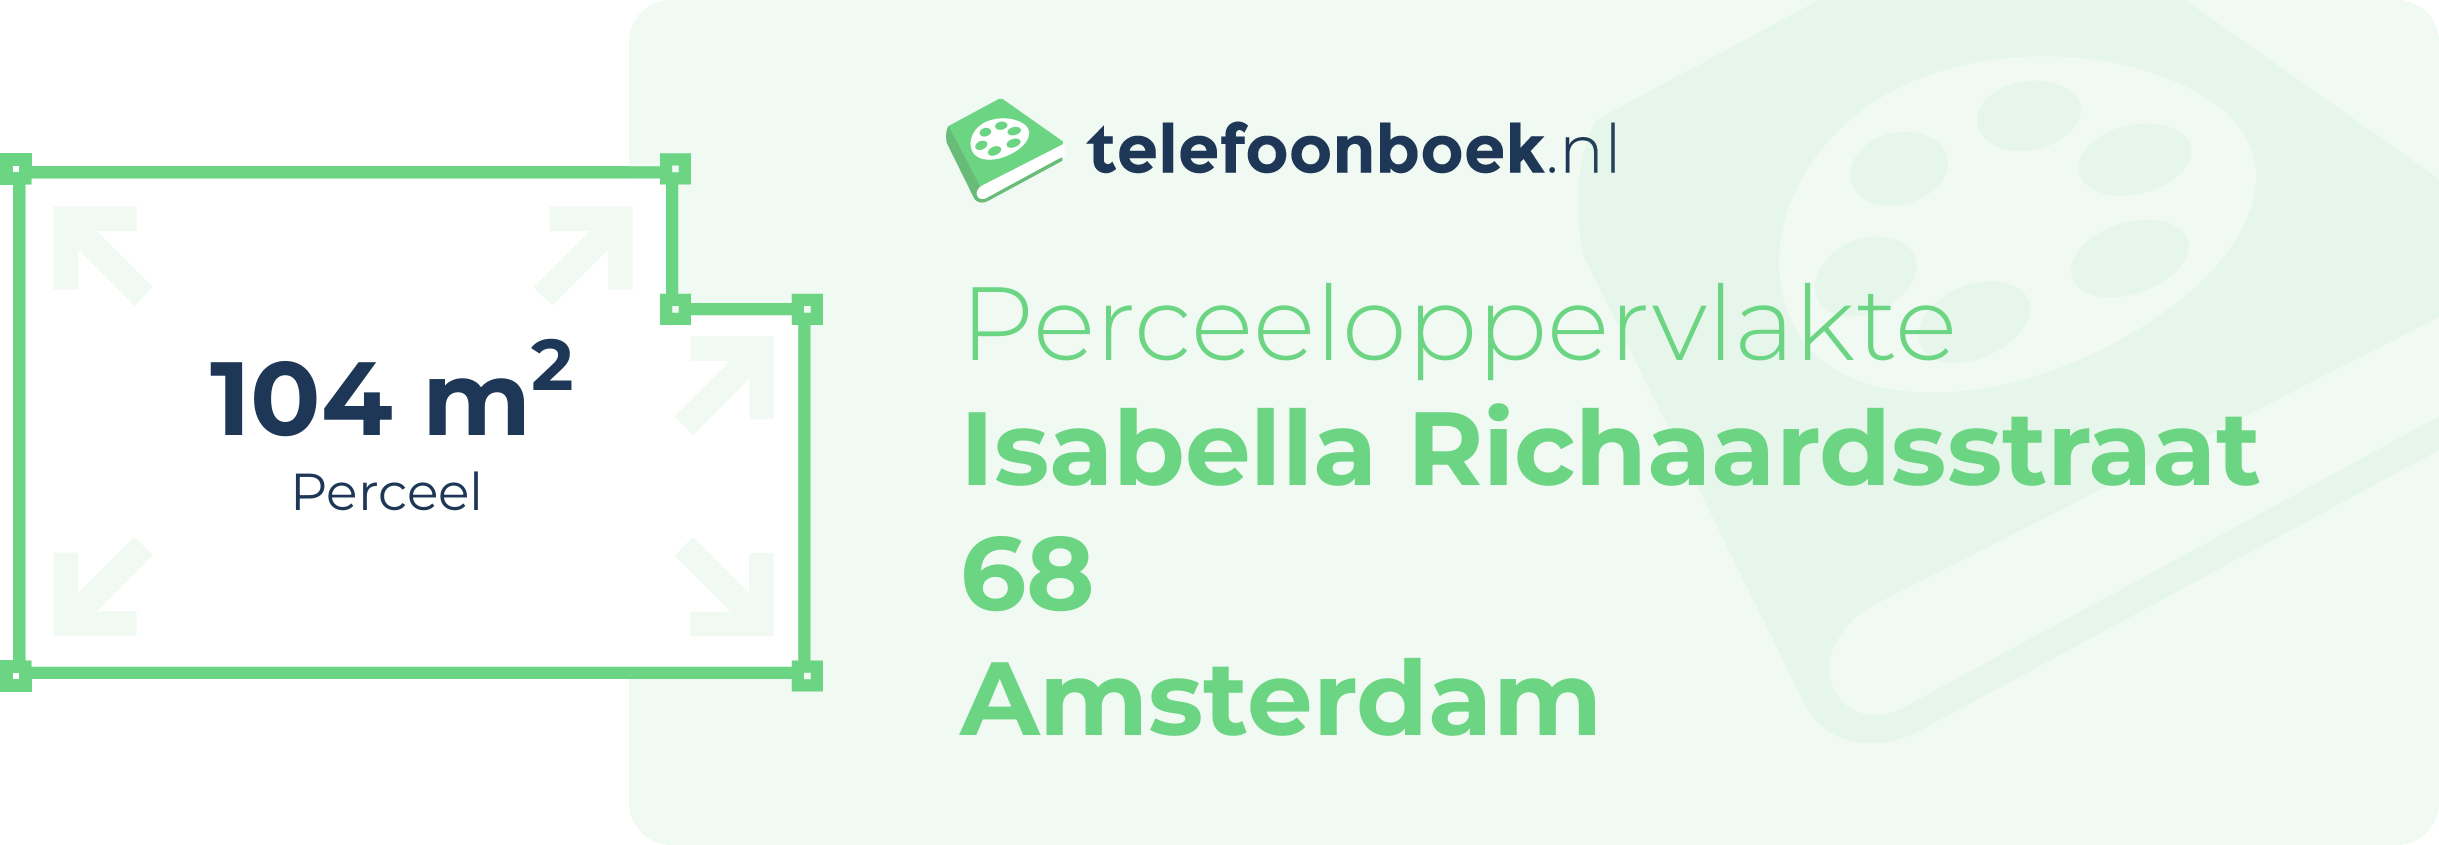 Perceeloppervlakte Isabella Richaardsstraat 68 Amsterdam